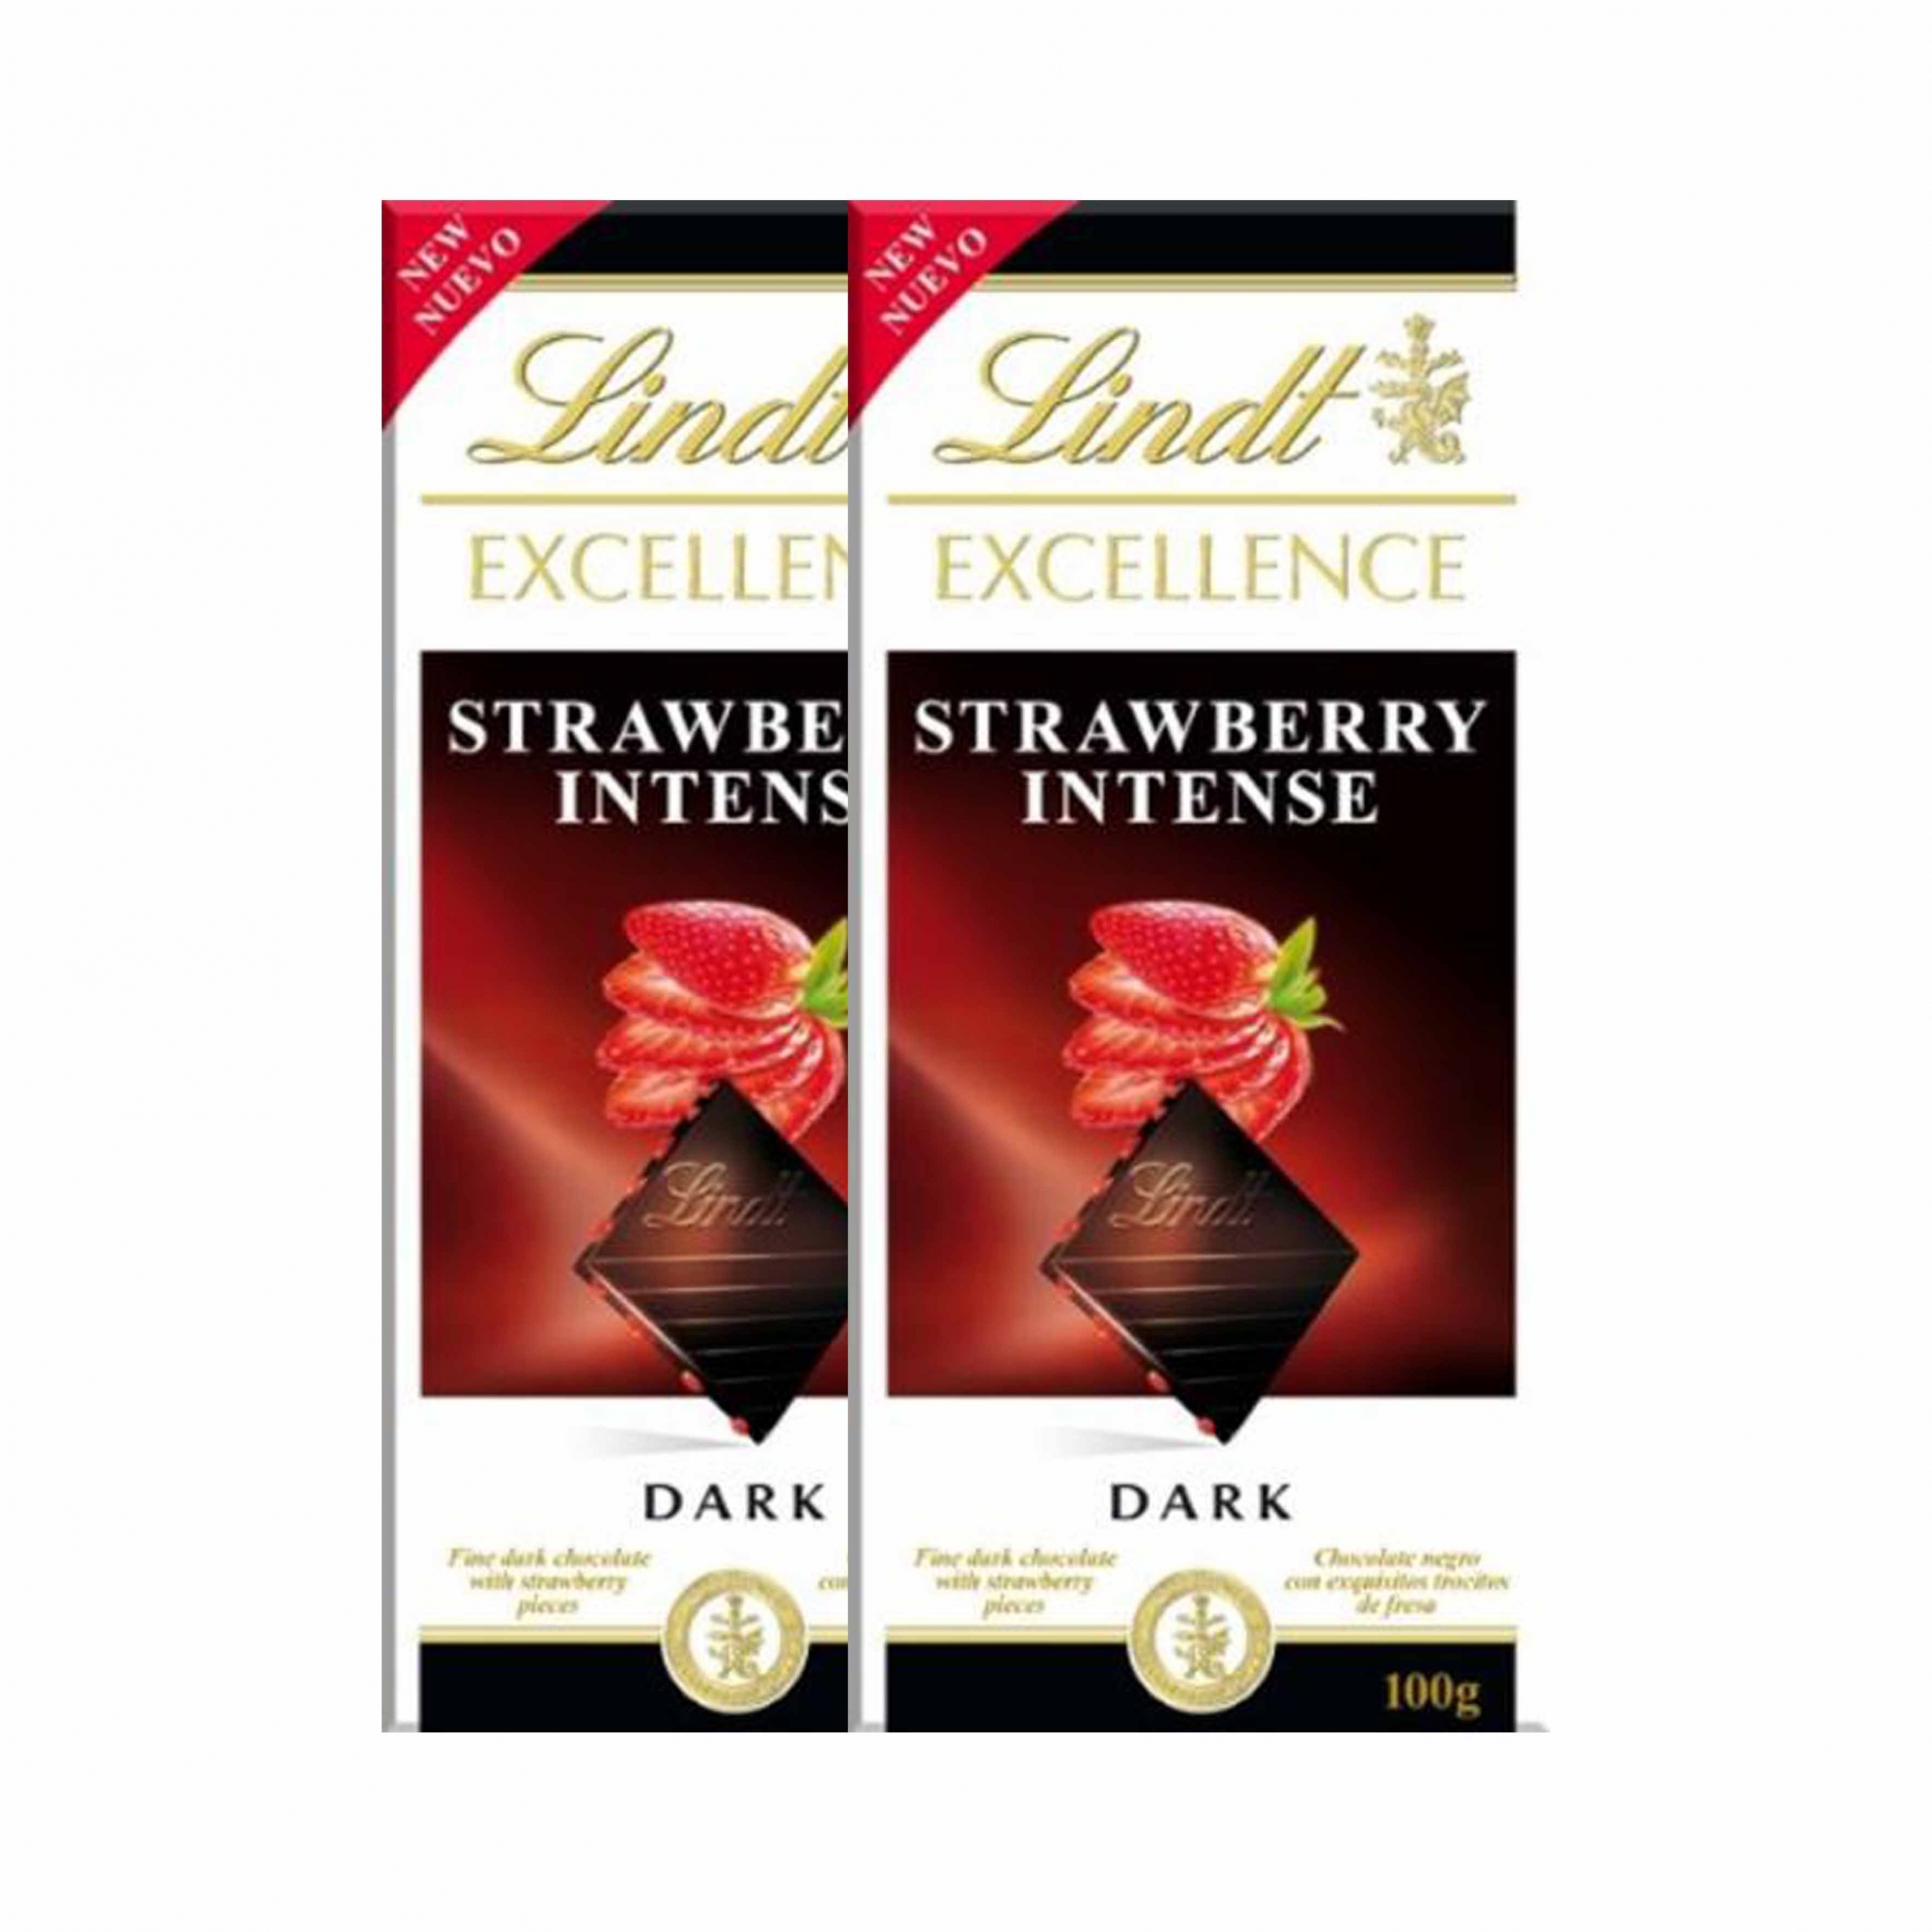 Kit 2x Barra de Chocolate Lindt Excellence Strawberry Intense 100g Dark